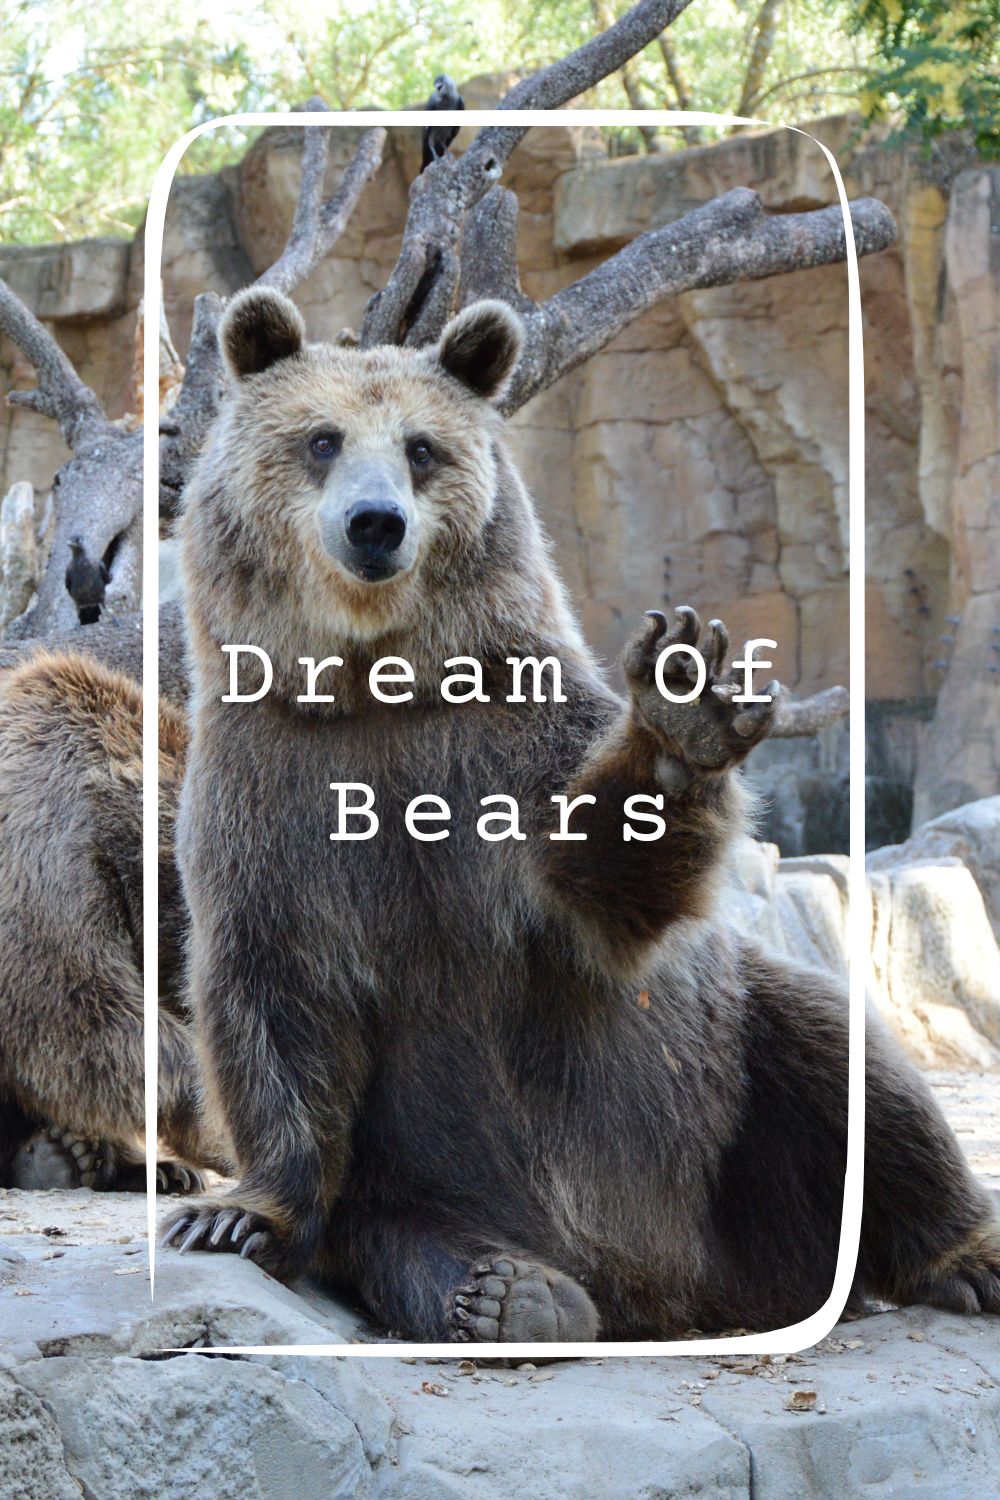 Dream Of Bears Meanings 1